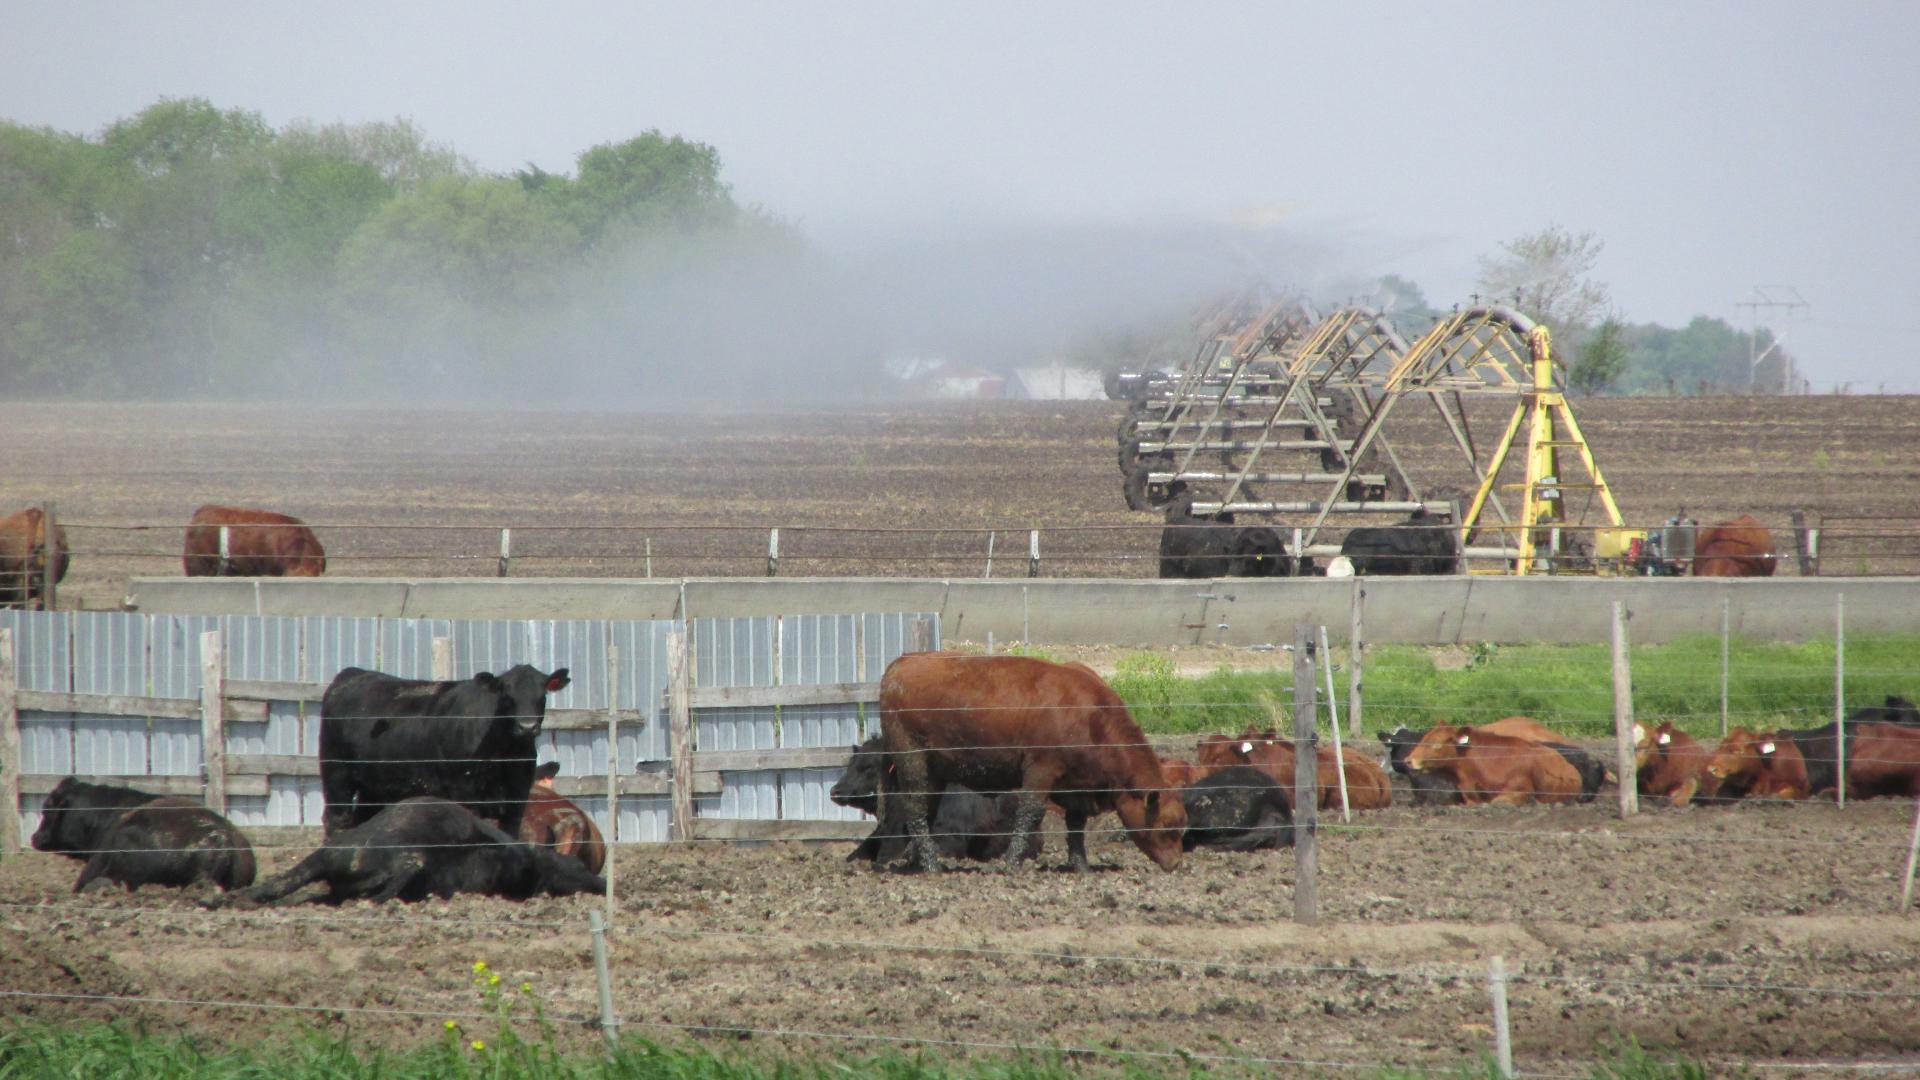 manure irrigation behind feedlot cattle